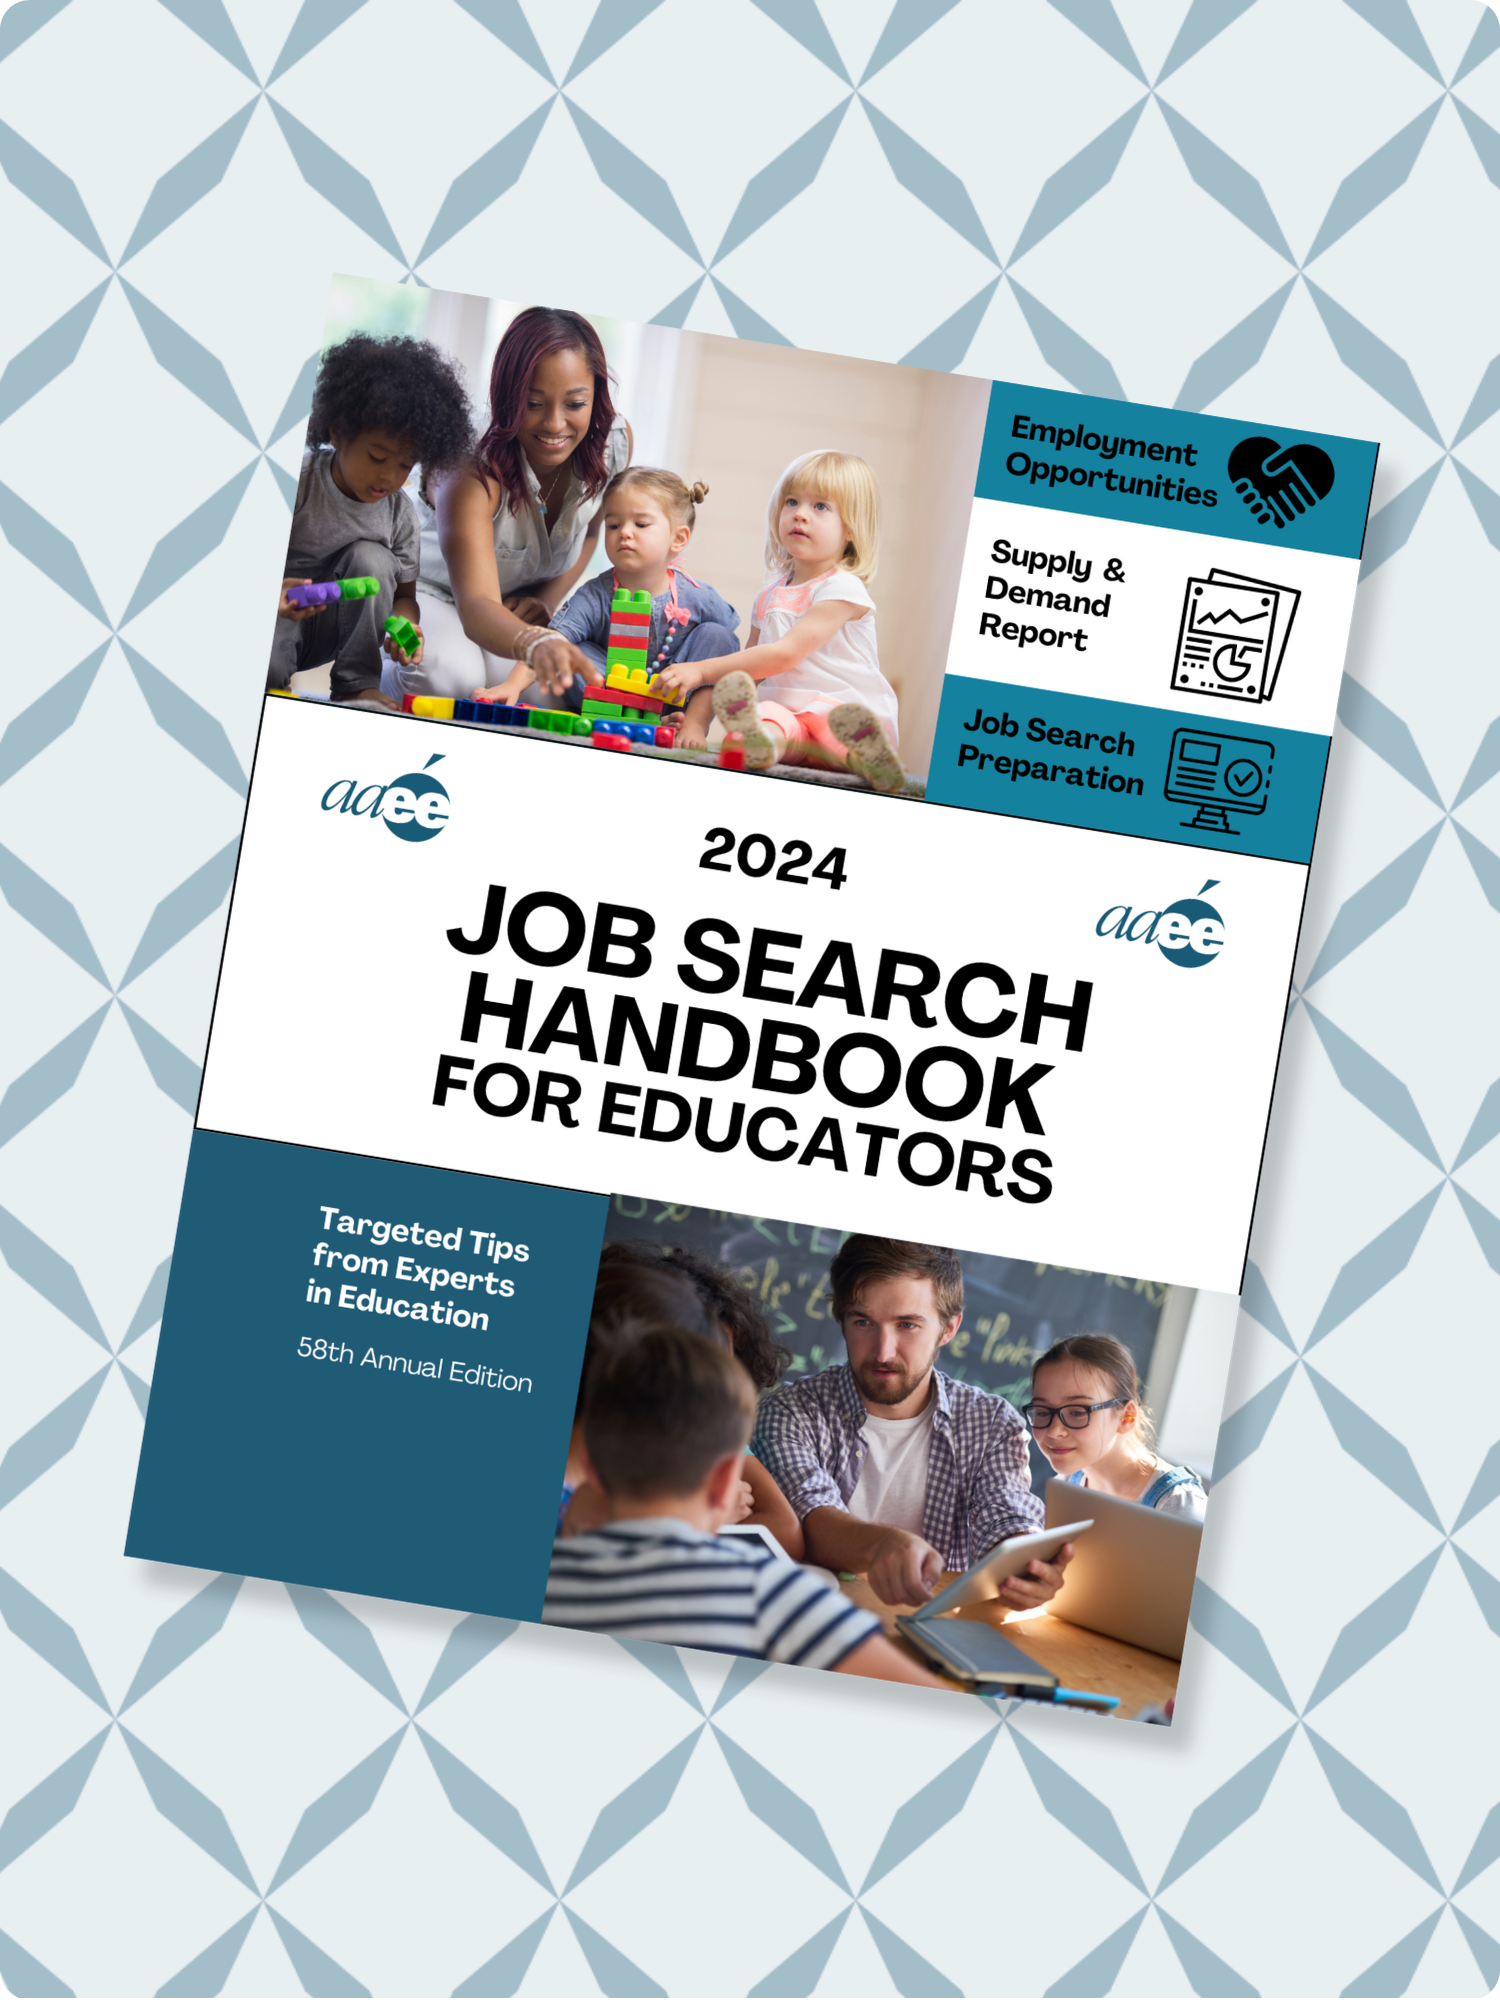 It is a job search handbook for educators.